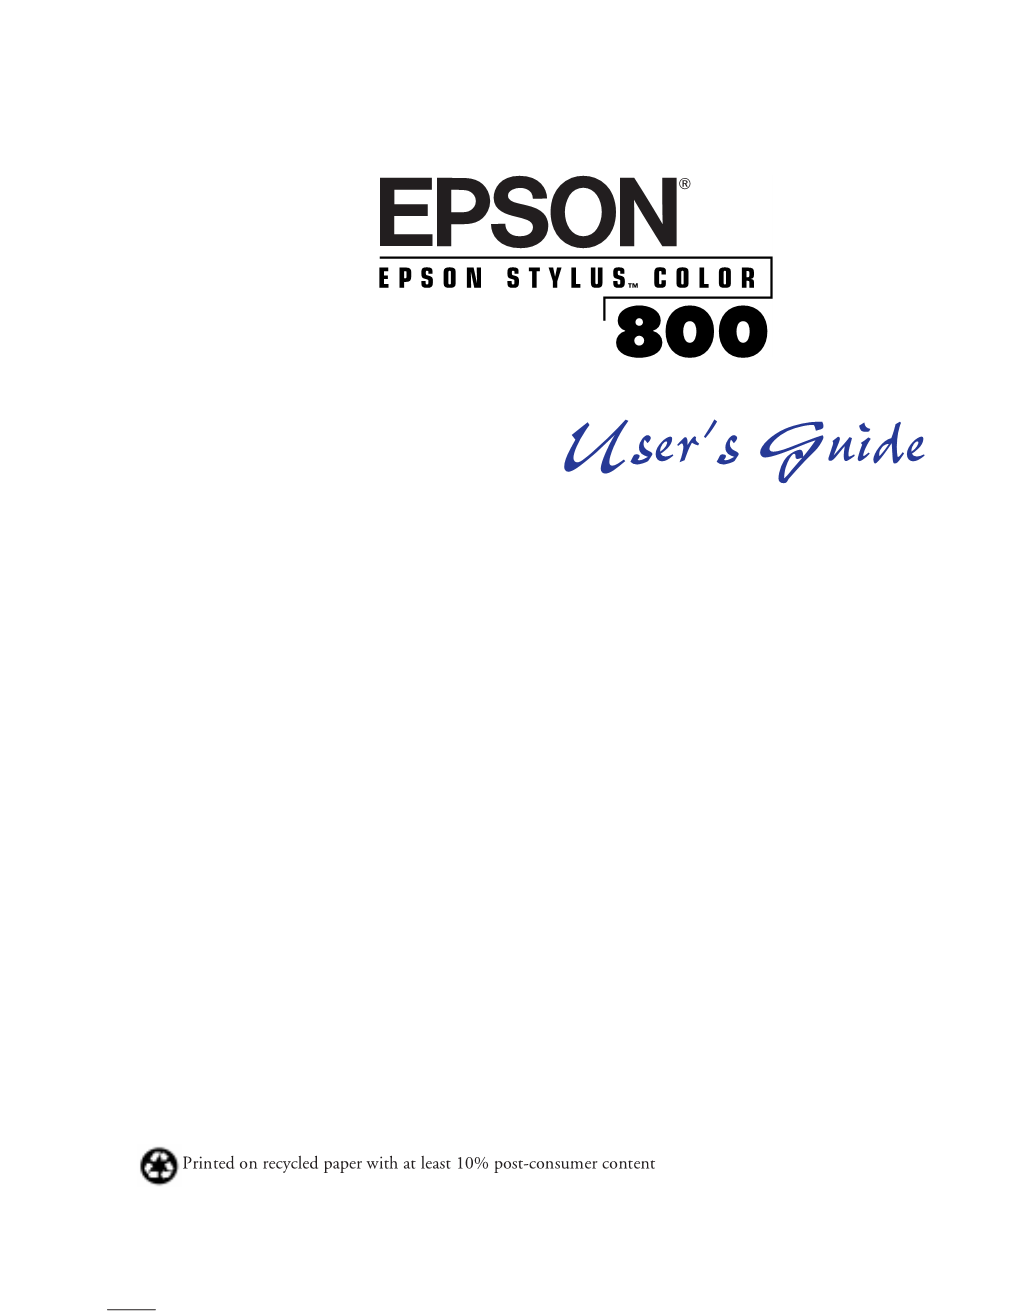 Epson Printer Manual